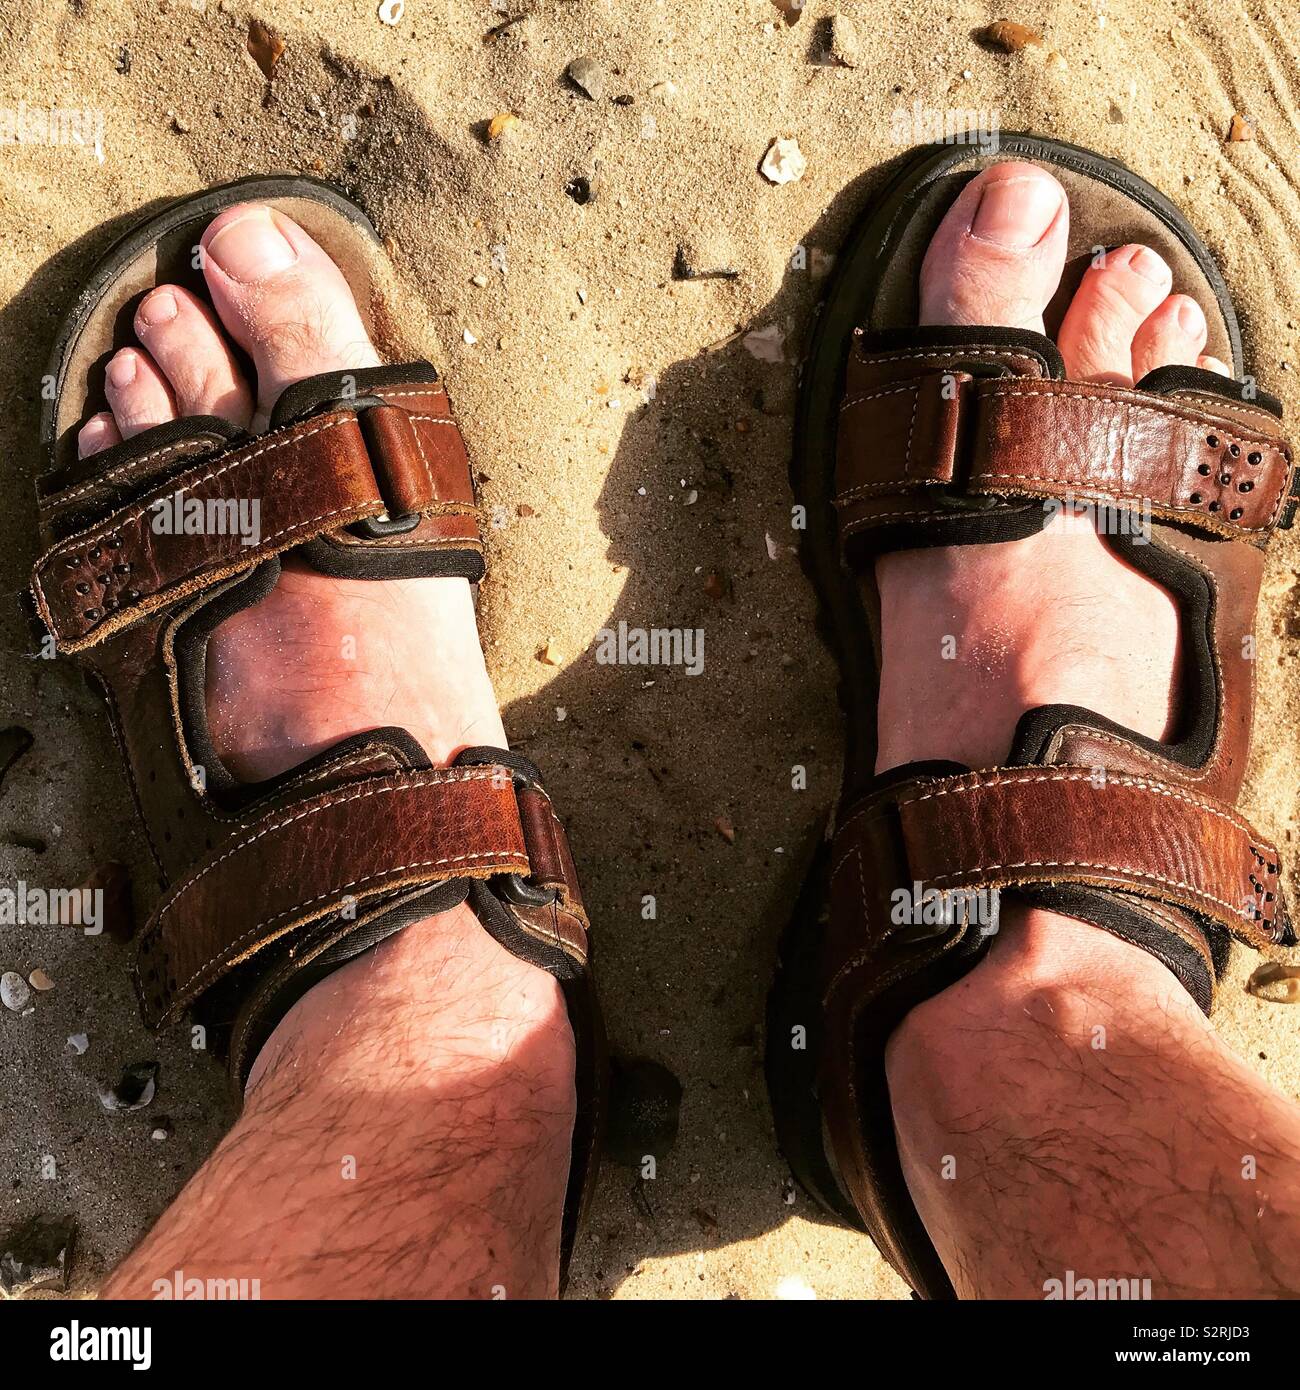 Sunburnt feet wearing sandals on a sandy beach. Stock Photo